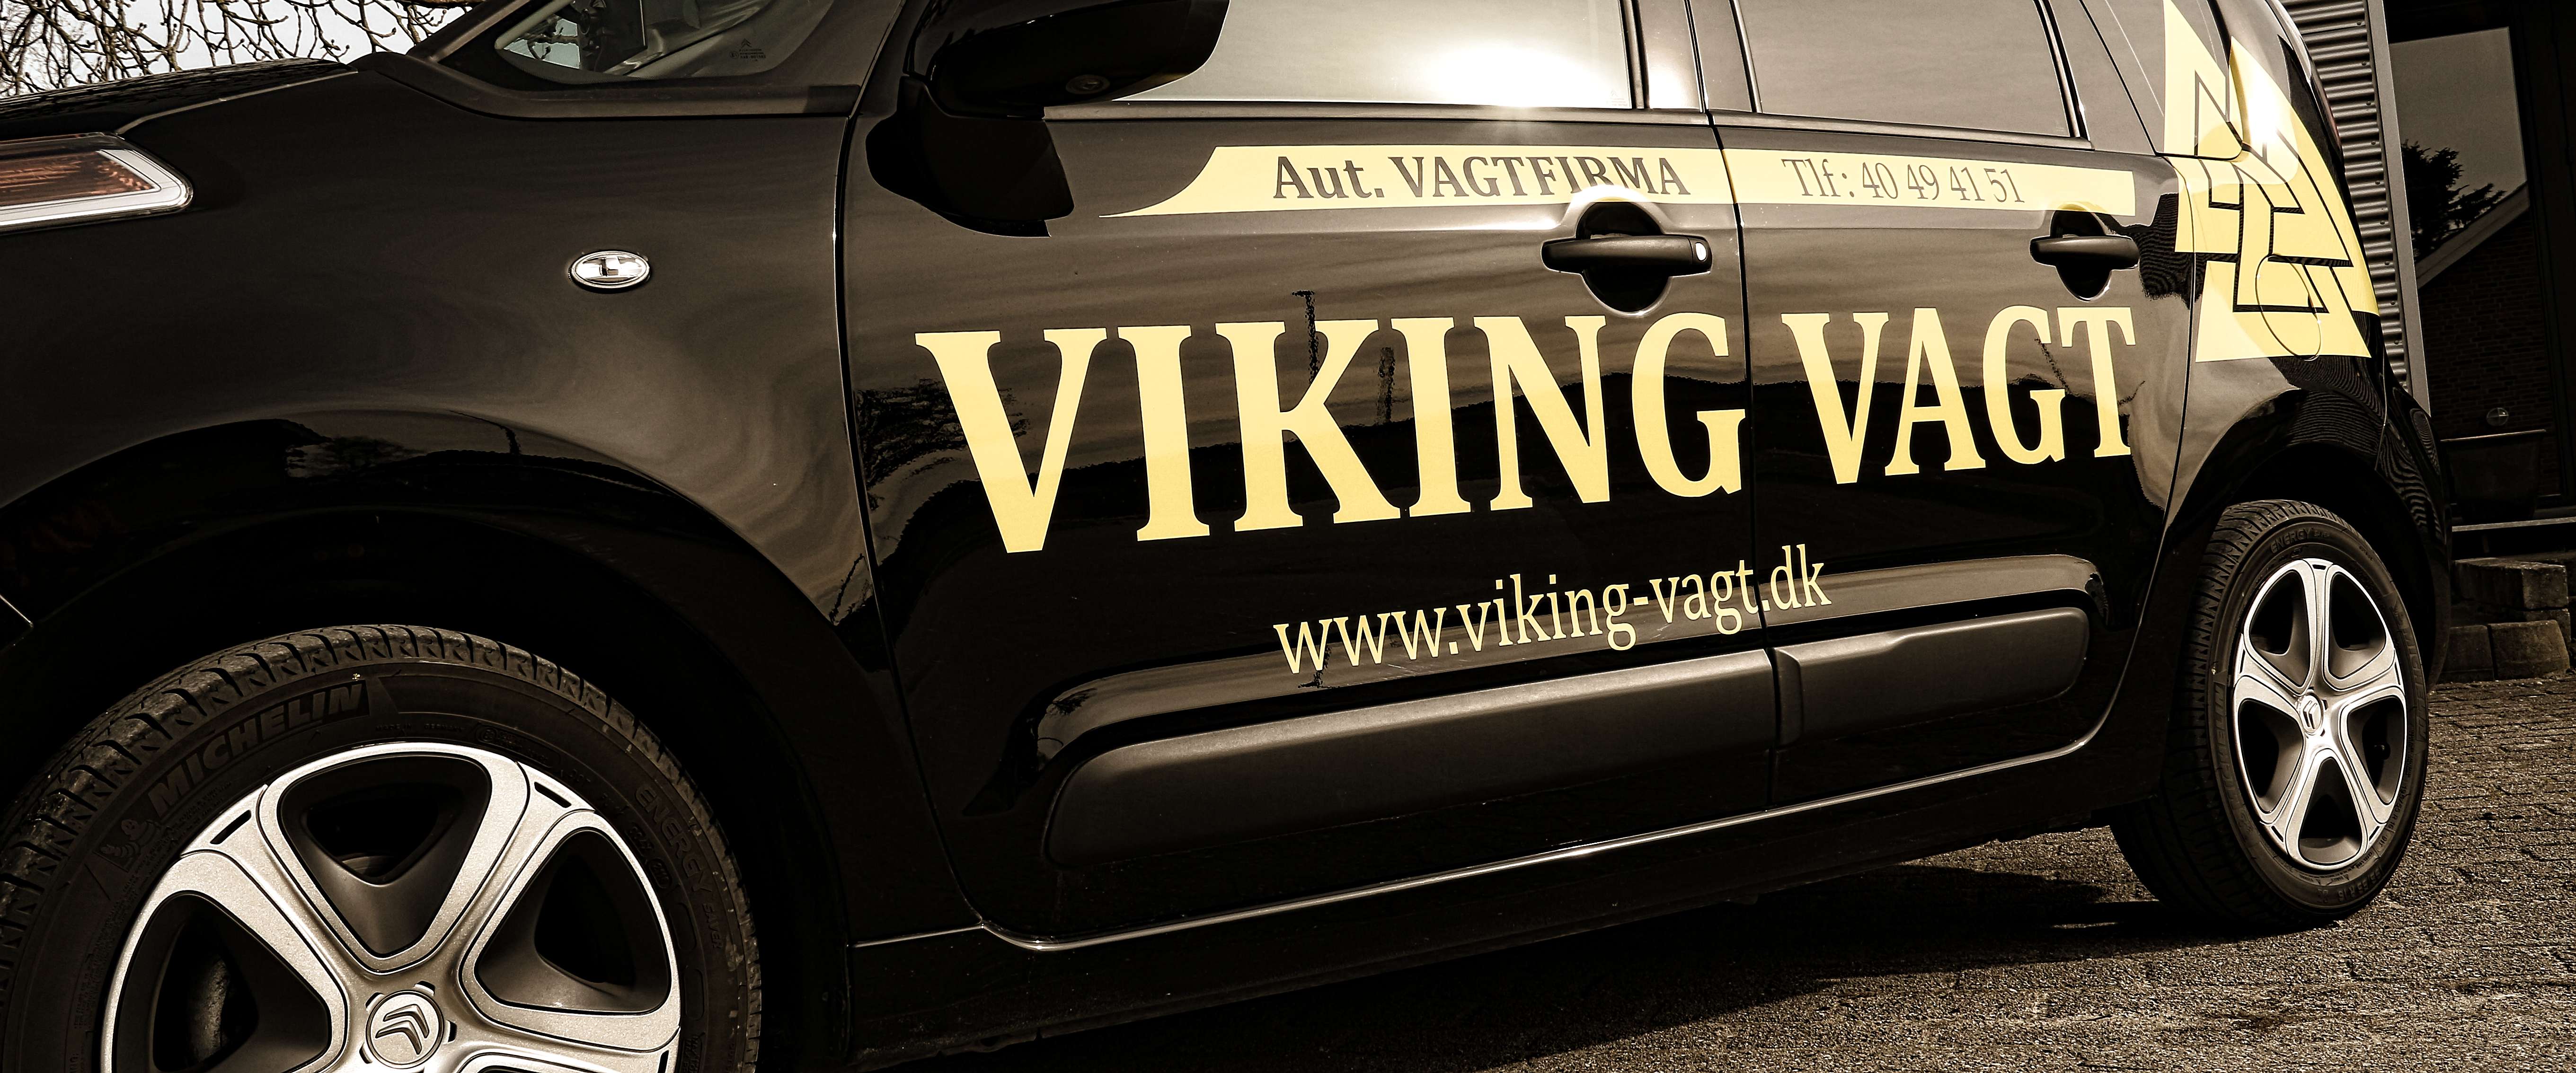 Viking-vagt-firma-4 copy1.jpg